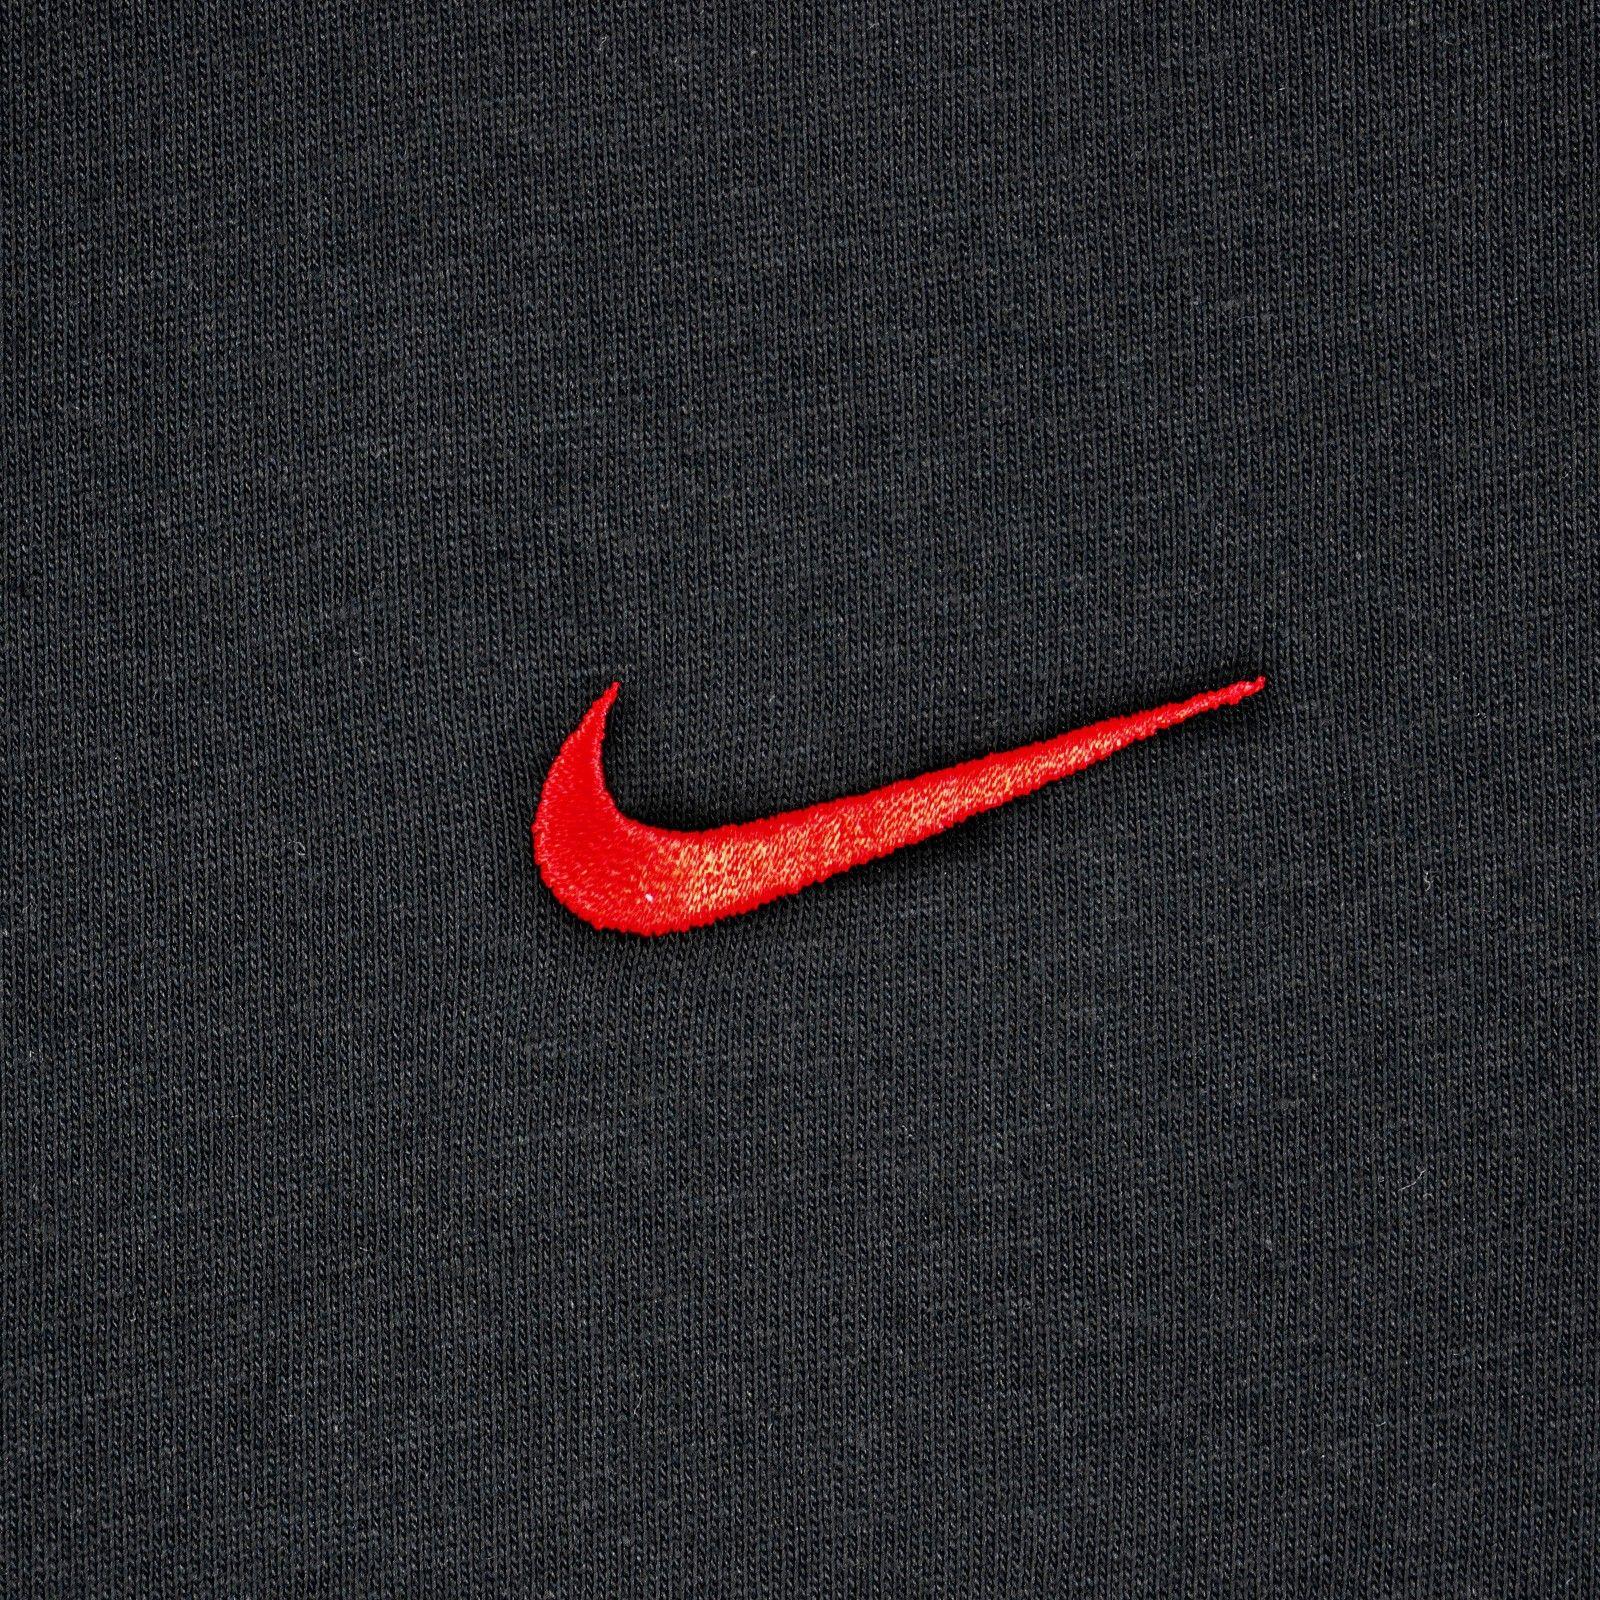 Black Red Swoosh Logo - Nike Basic Swoosh Tee Men's Casual Sports Cotton T-Shirt Tennis ...